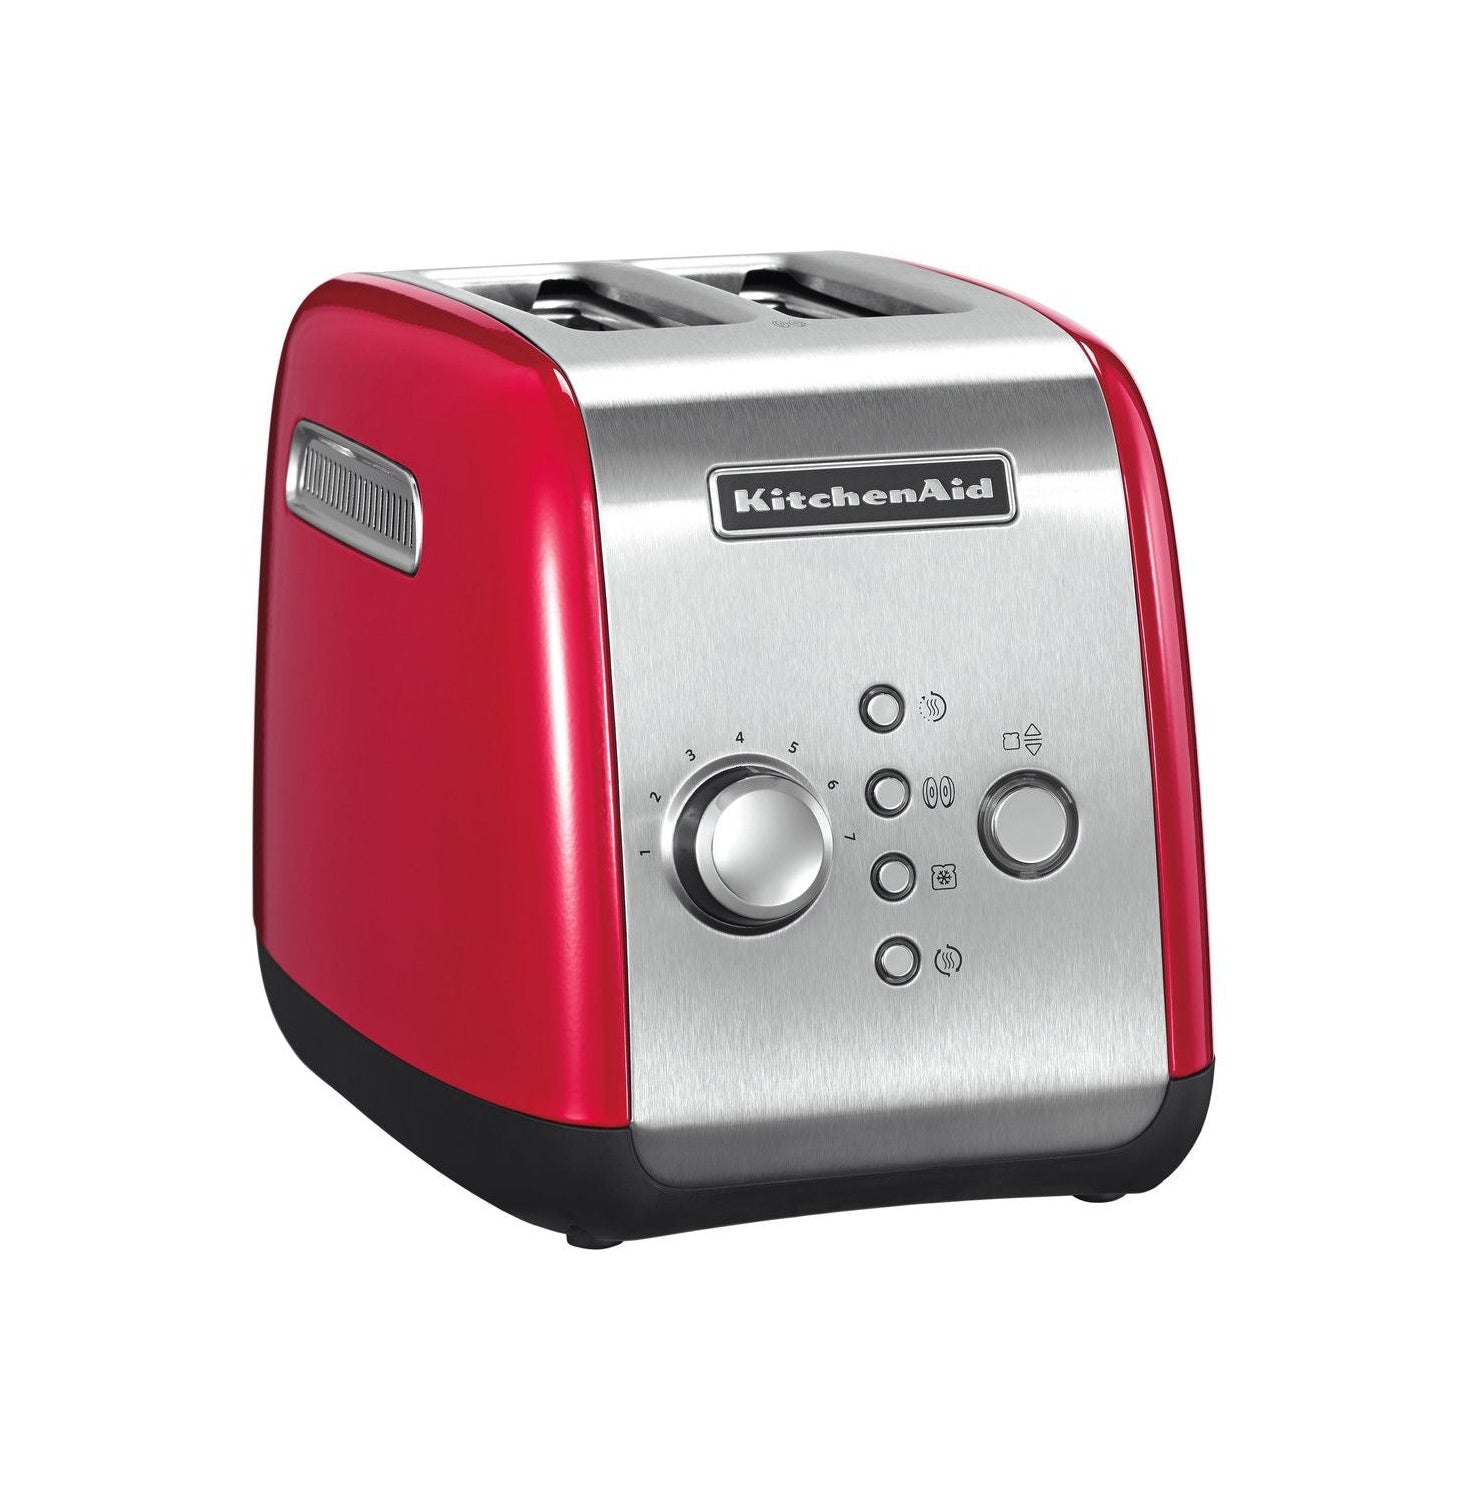 Kitchen Aid 5 KMT221 Toaster automatique pour 2 tranches, Empire Red